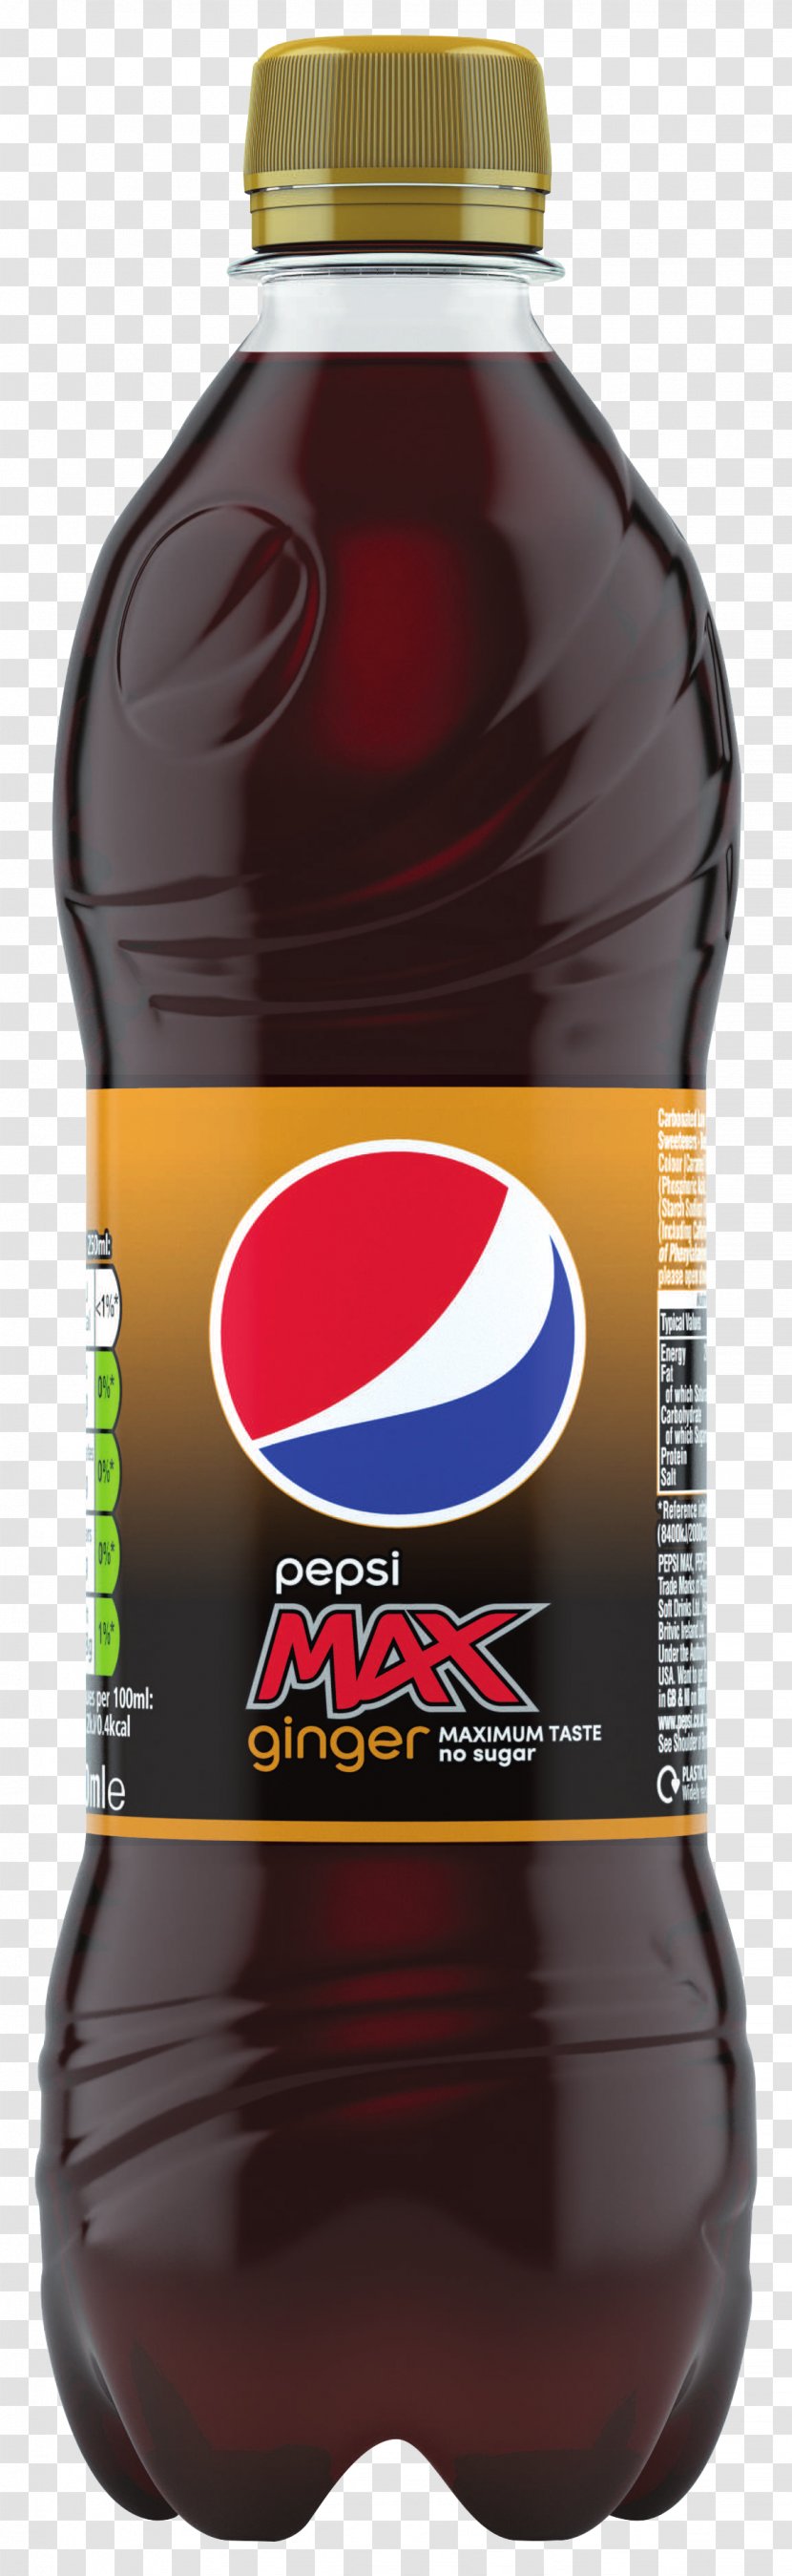 Pepsi Max Fizzy Drinks Ginger Beer Cola Transparent PNG